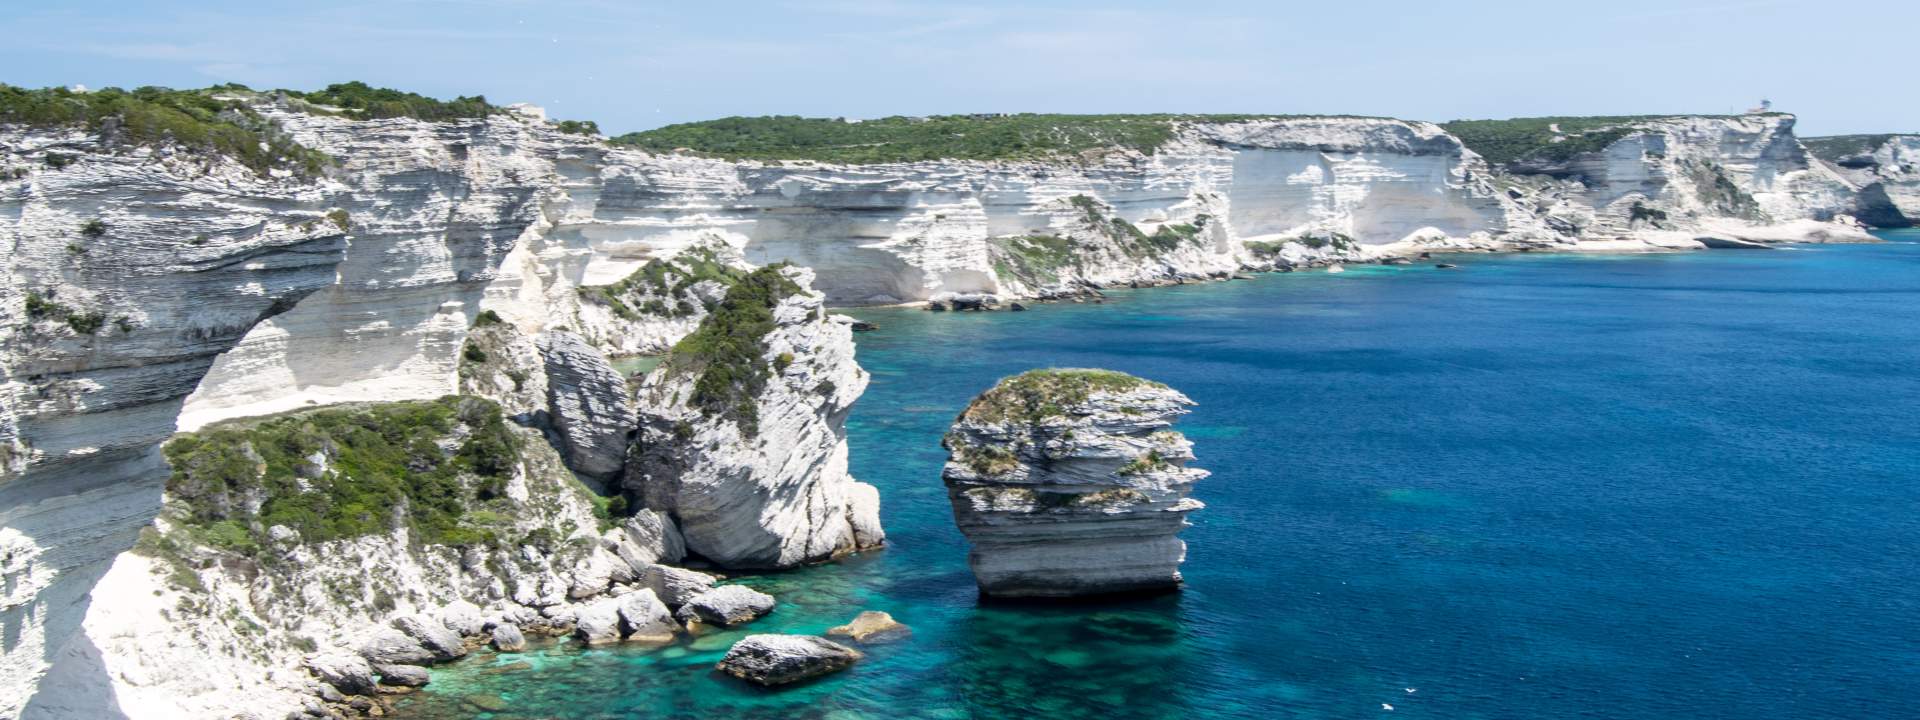 Auf Entdeckungsreise im Süden Korsikas an Bords eines Katamarans